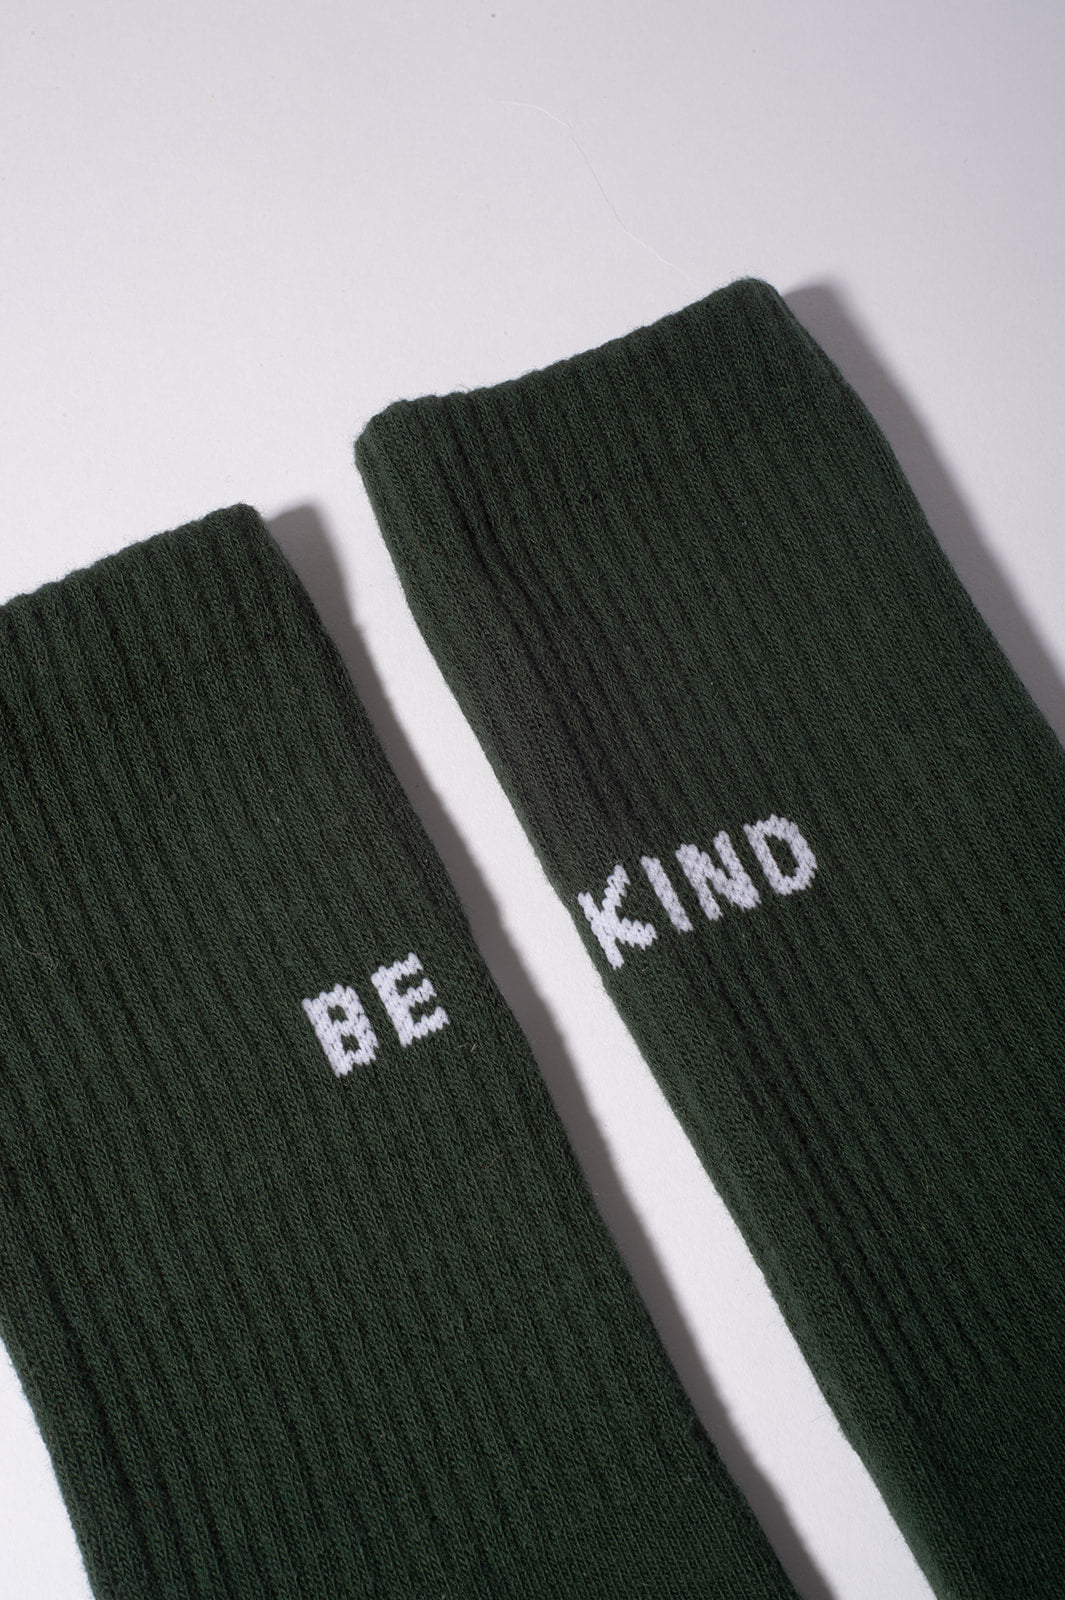 Be Kind Crew Socks Green